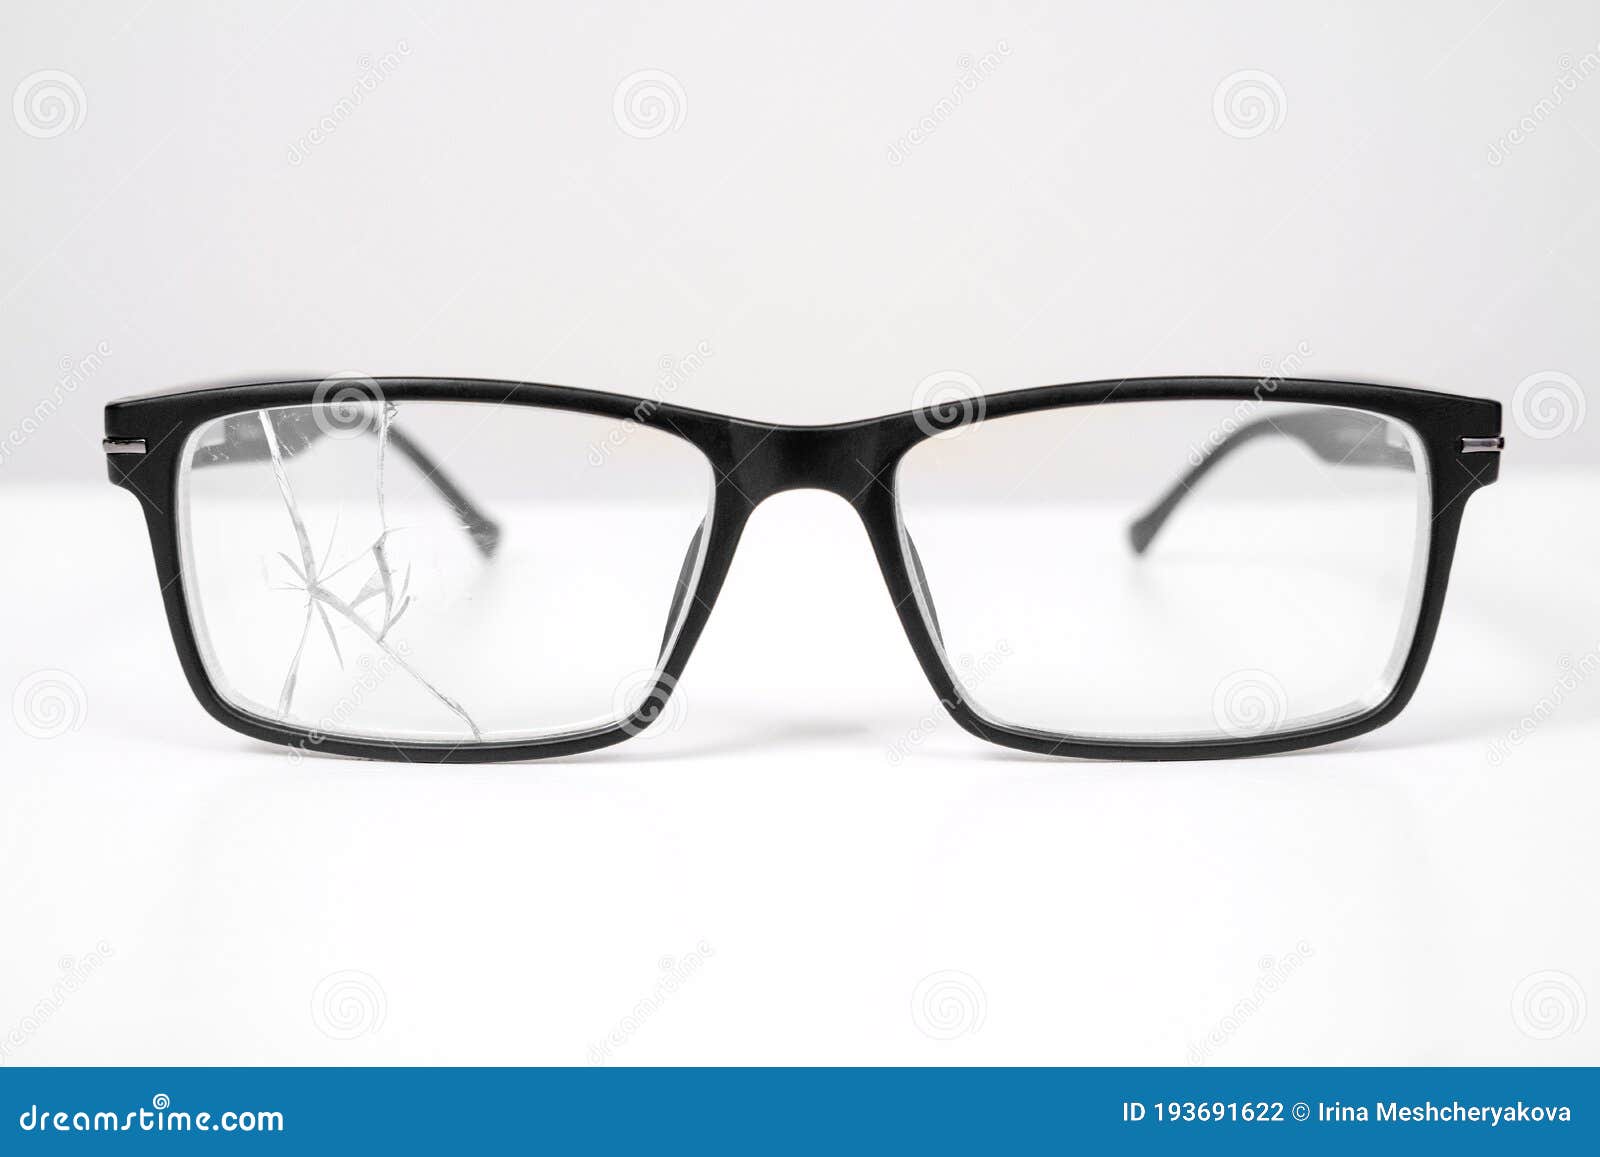 Close Up Of Broken Black Glasses On A White Background. Vision ...